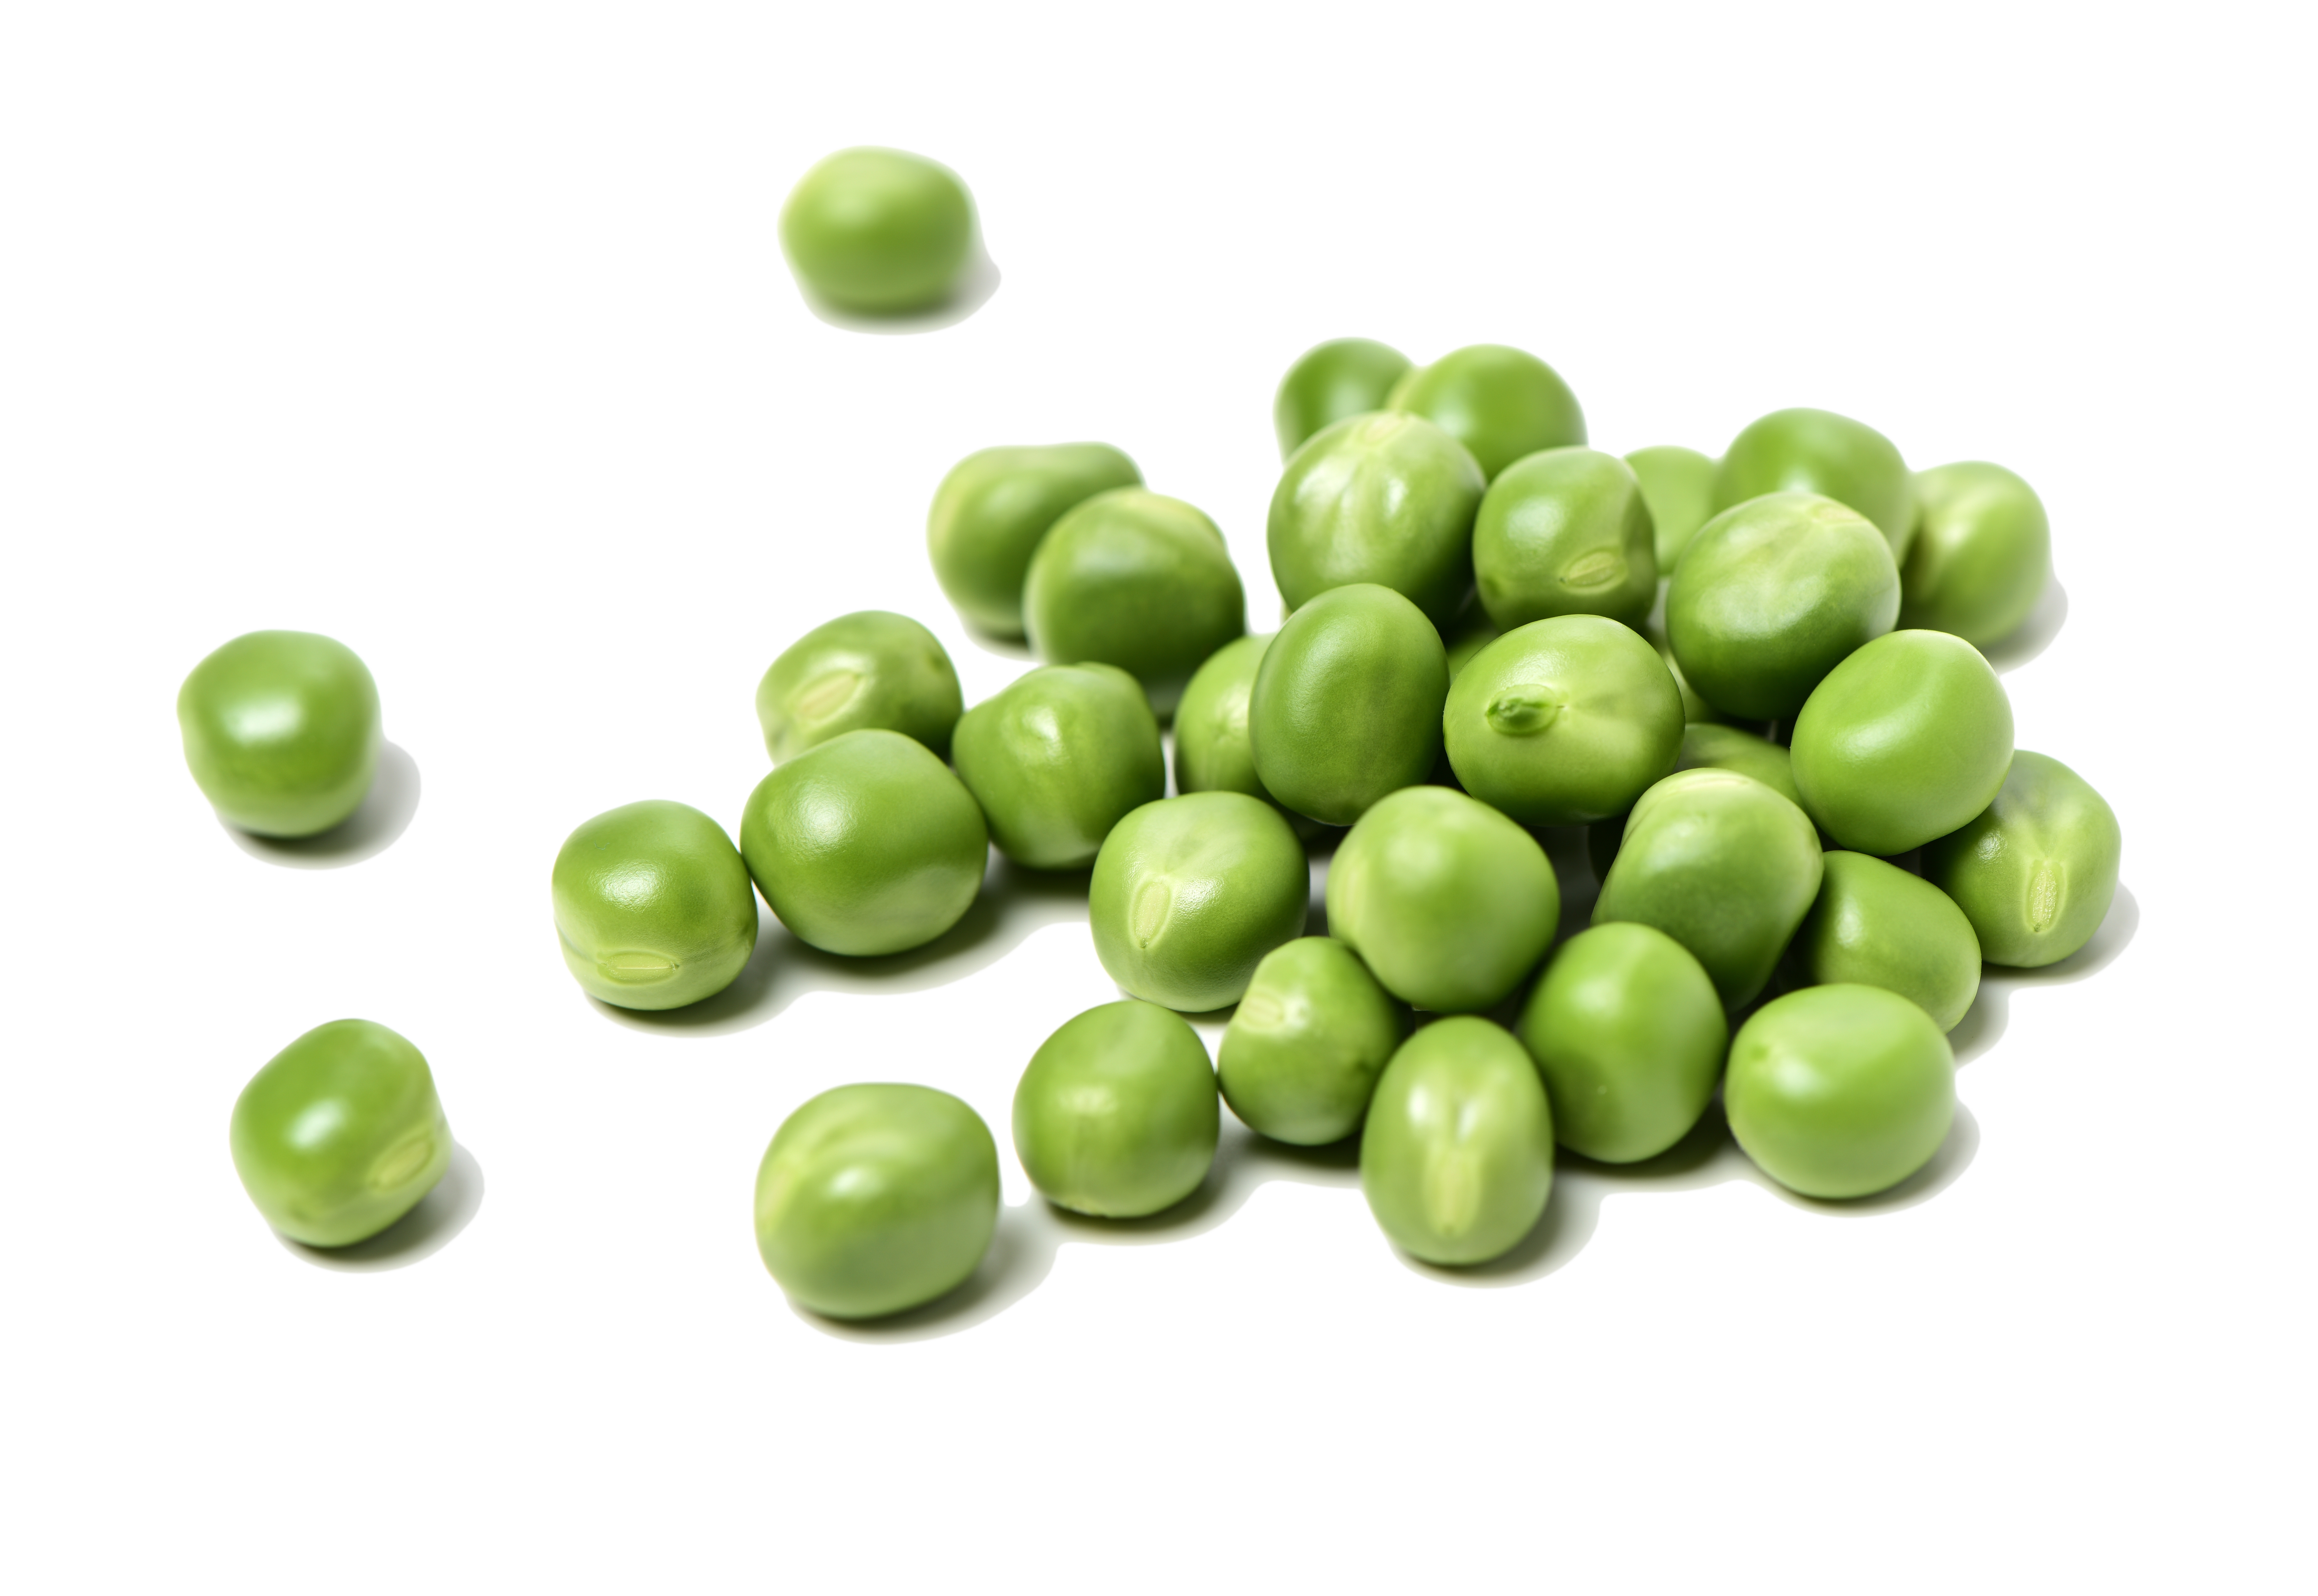 Peas campaign